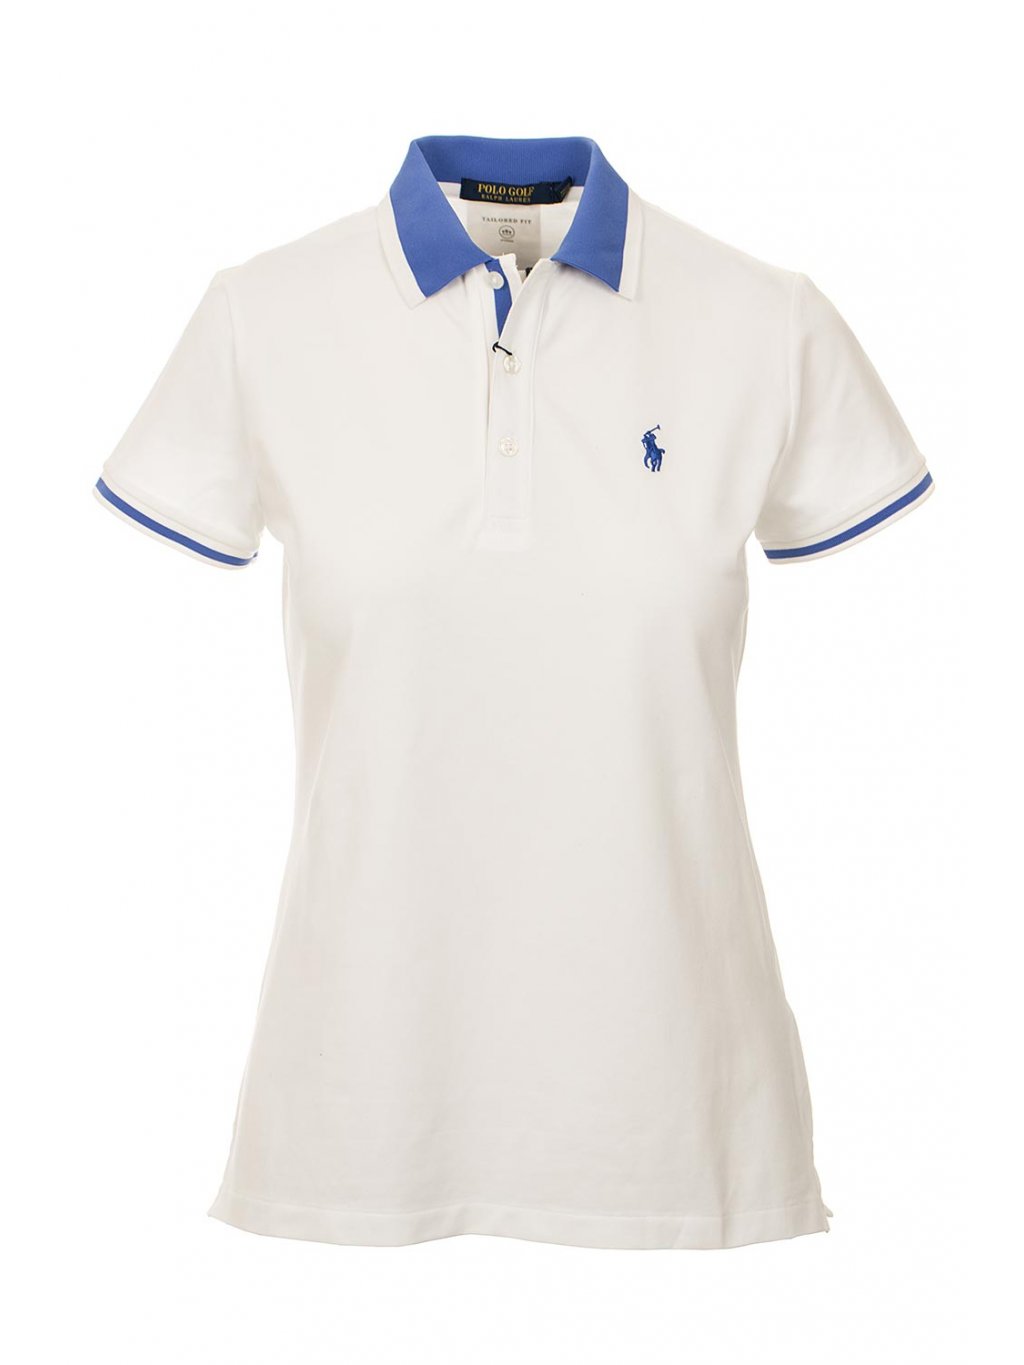 Ralph Lauren polo Golf dámské tričko bílé s modrou - FASHION AVENUE